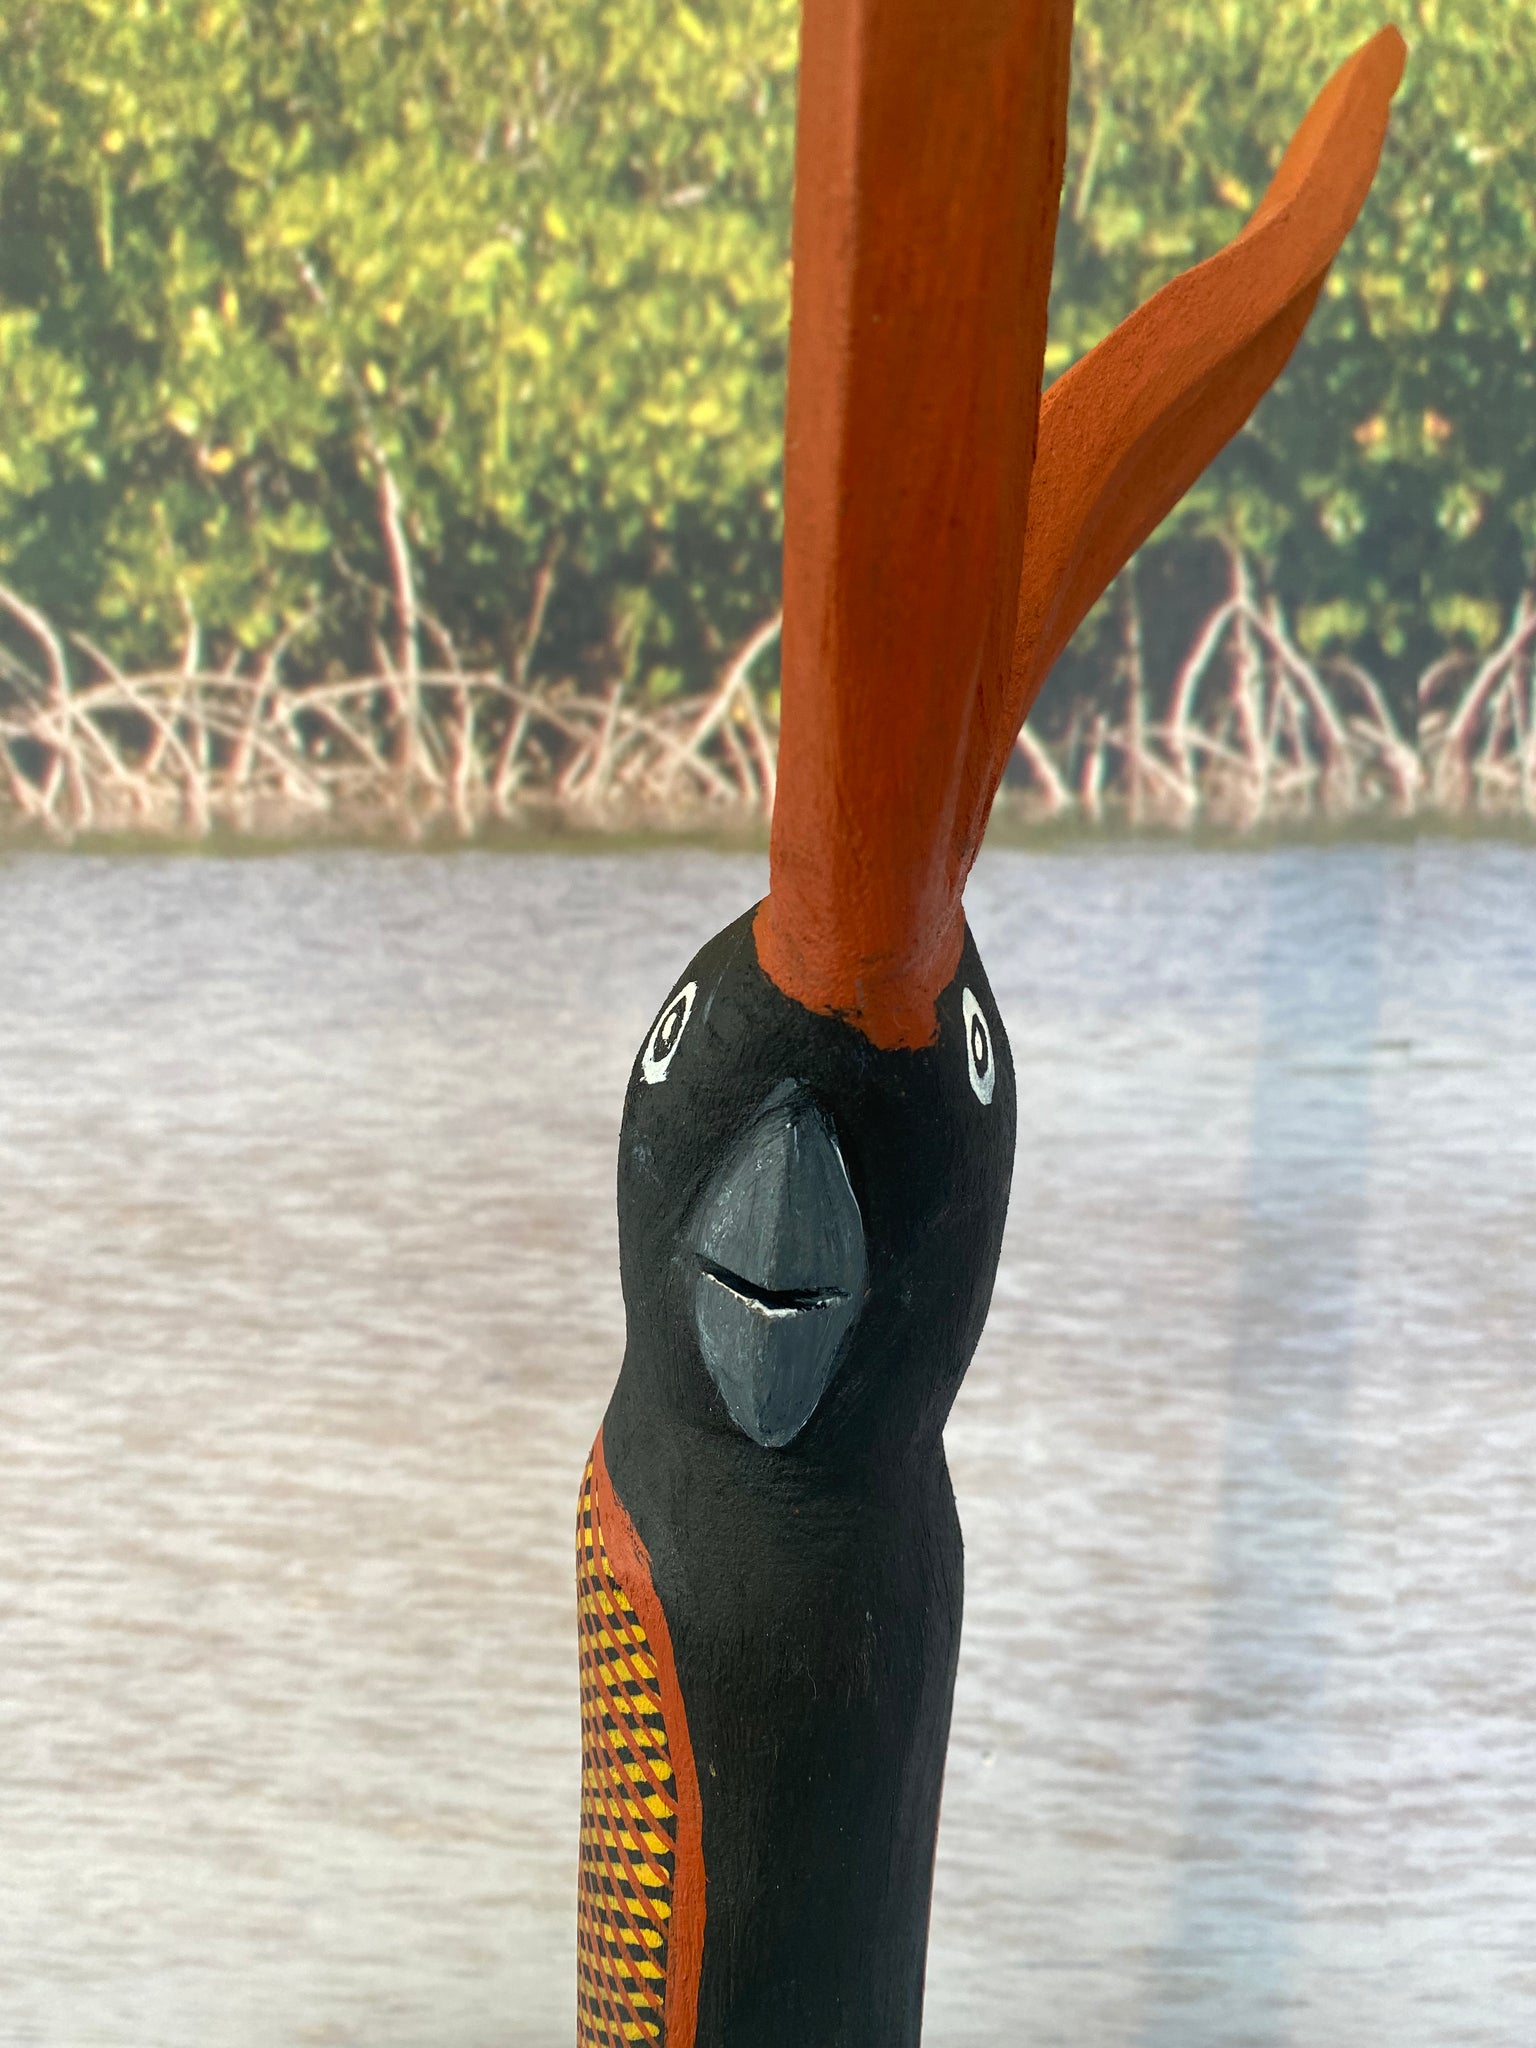 32. Karnamarr (Red Tailed Black Cockatoo)